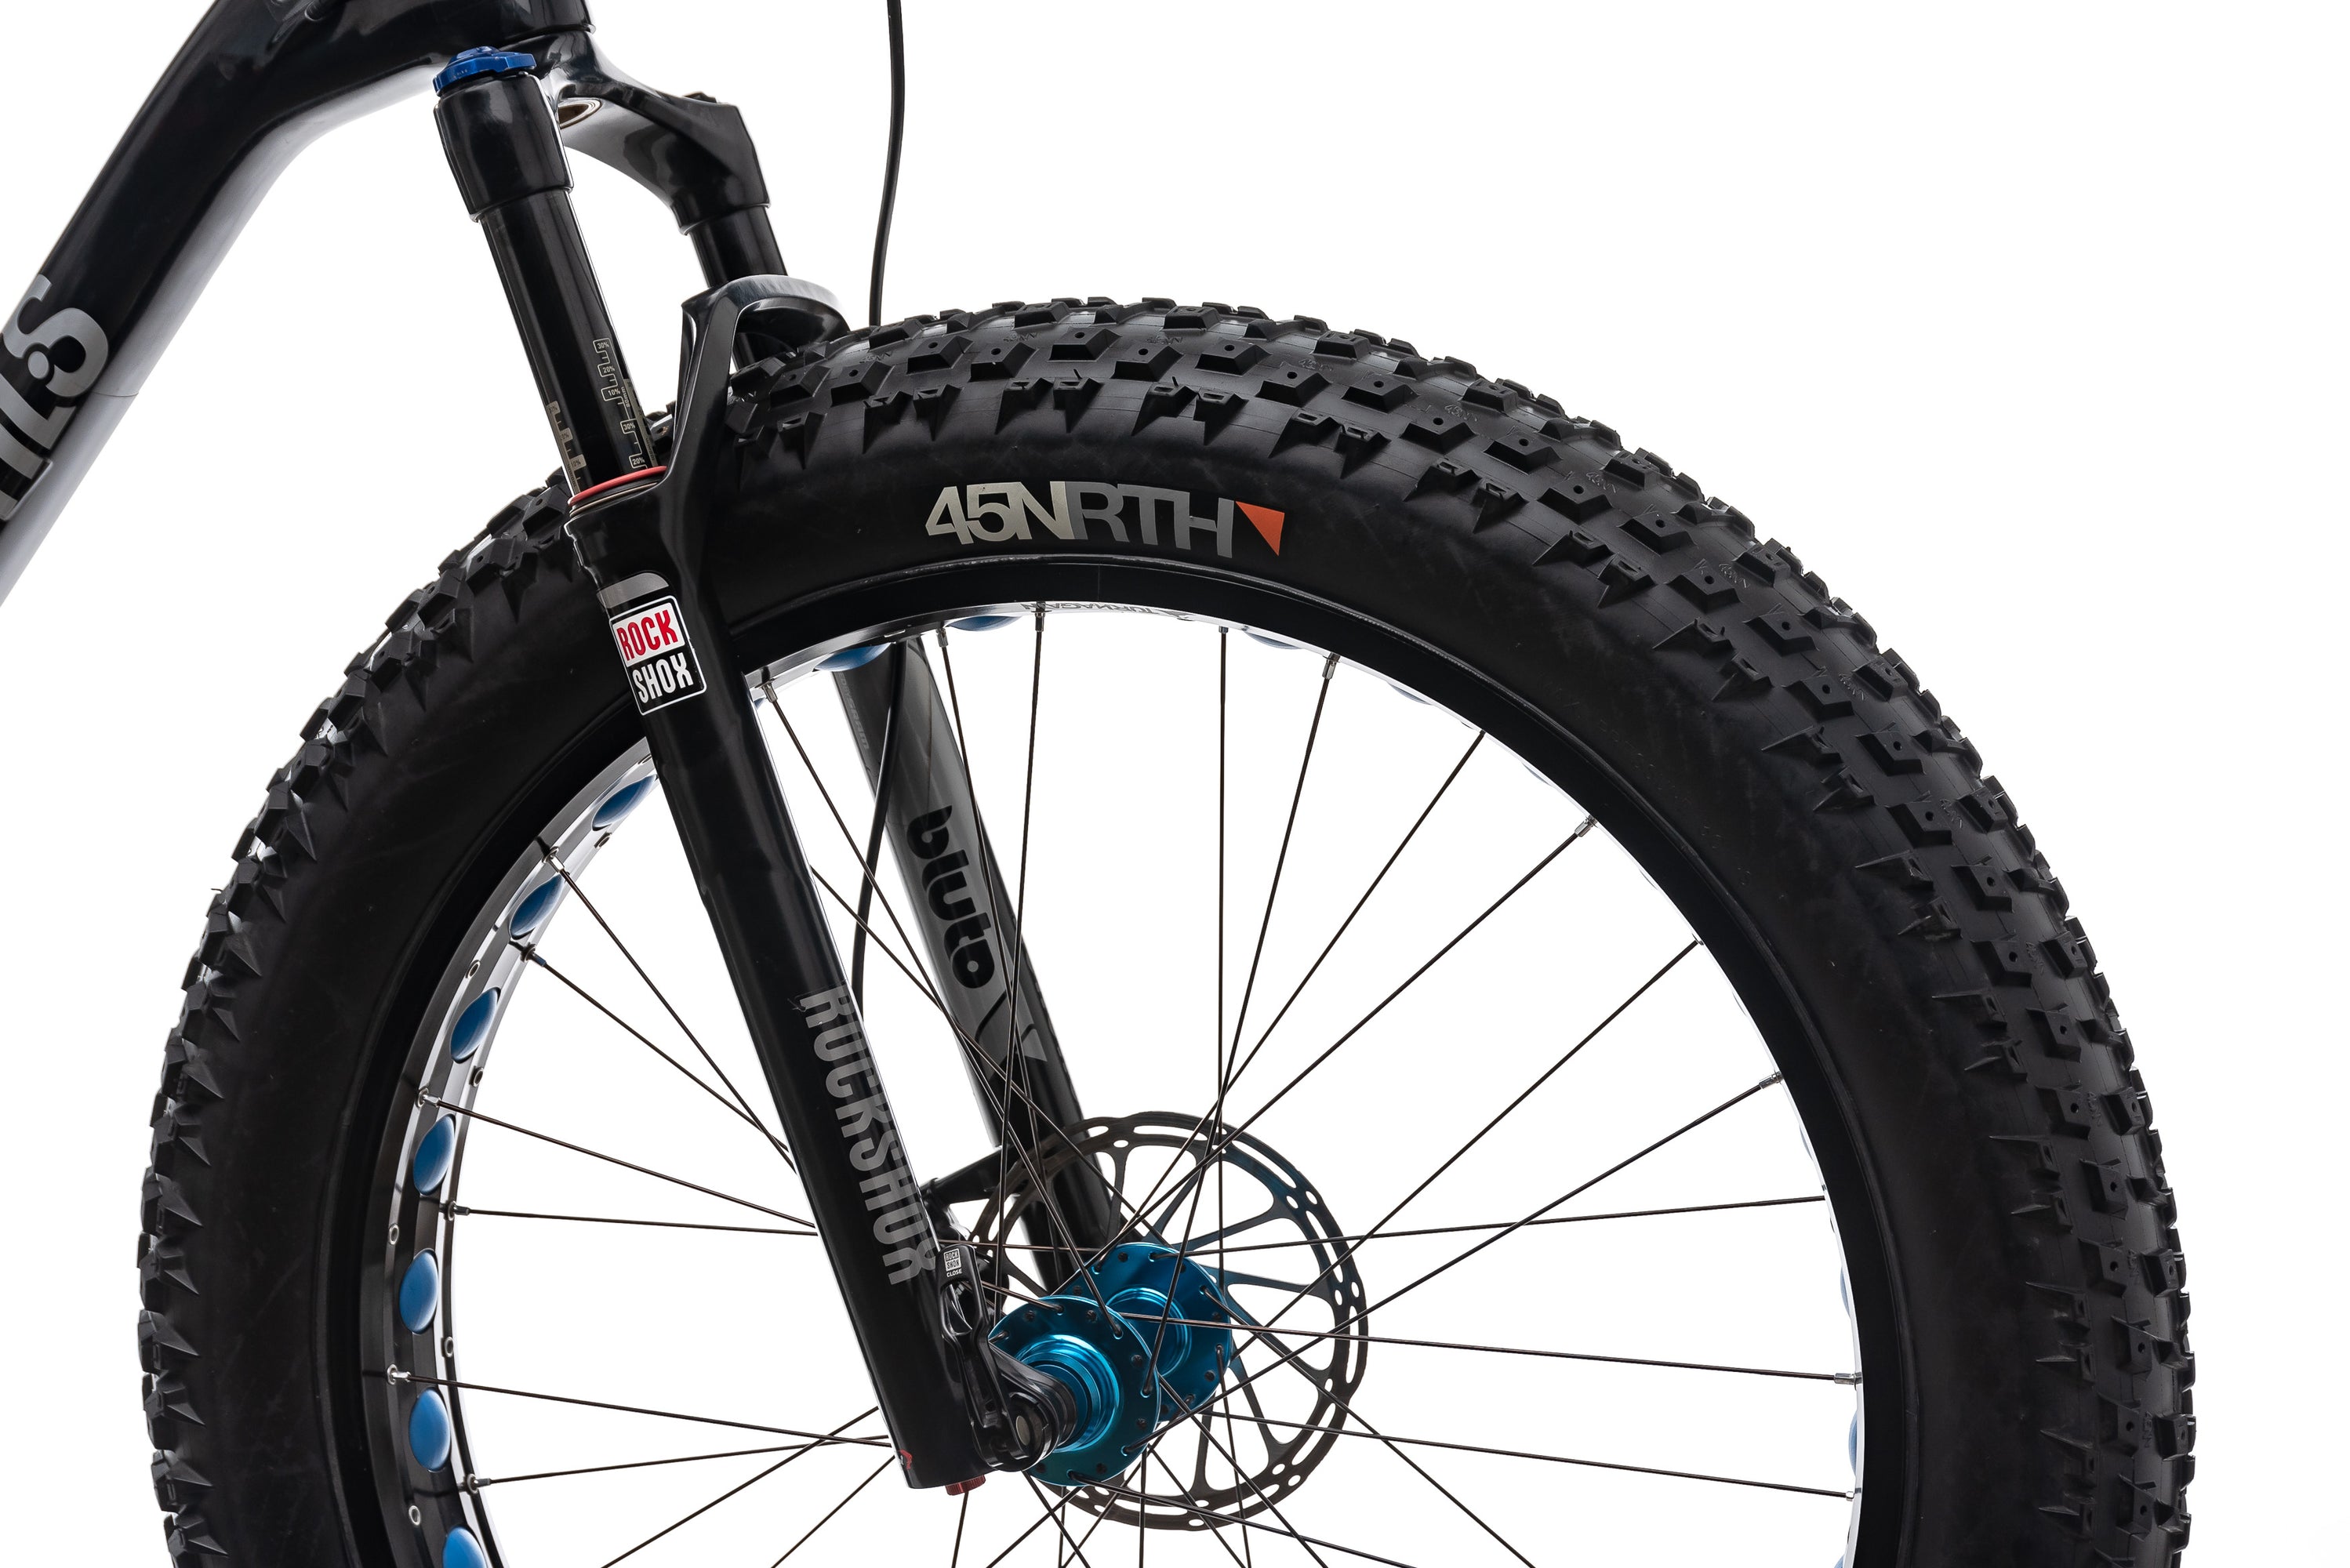 Boreals Echo X01 Mountain Bike - 2015, Large front wheel